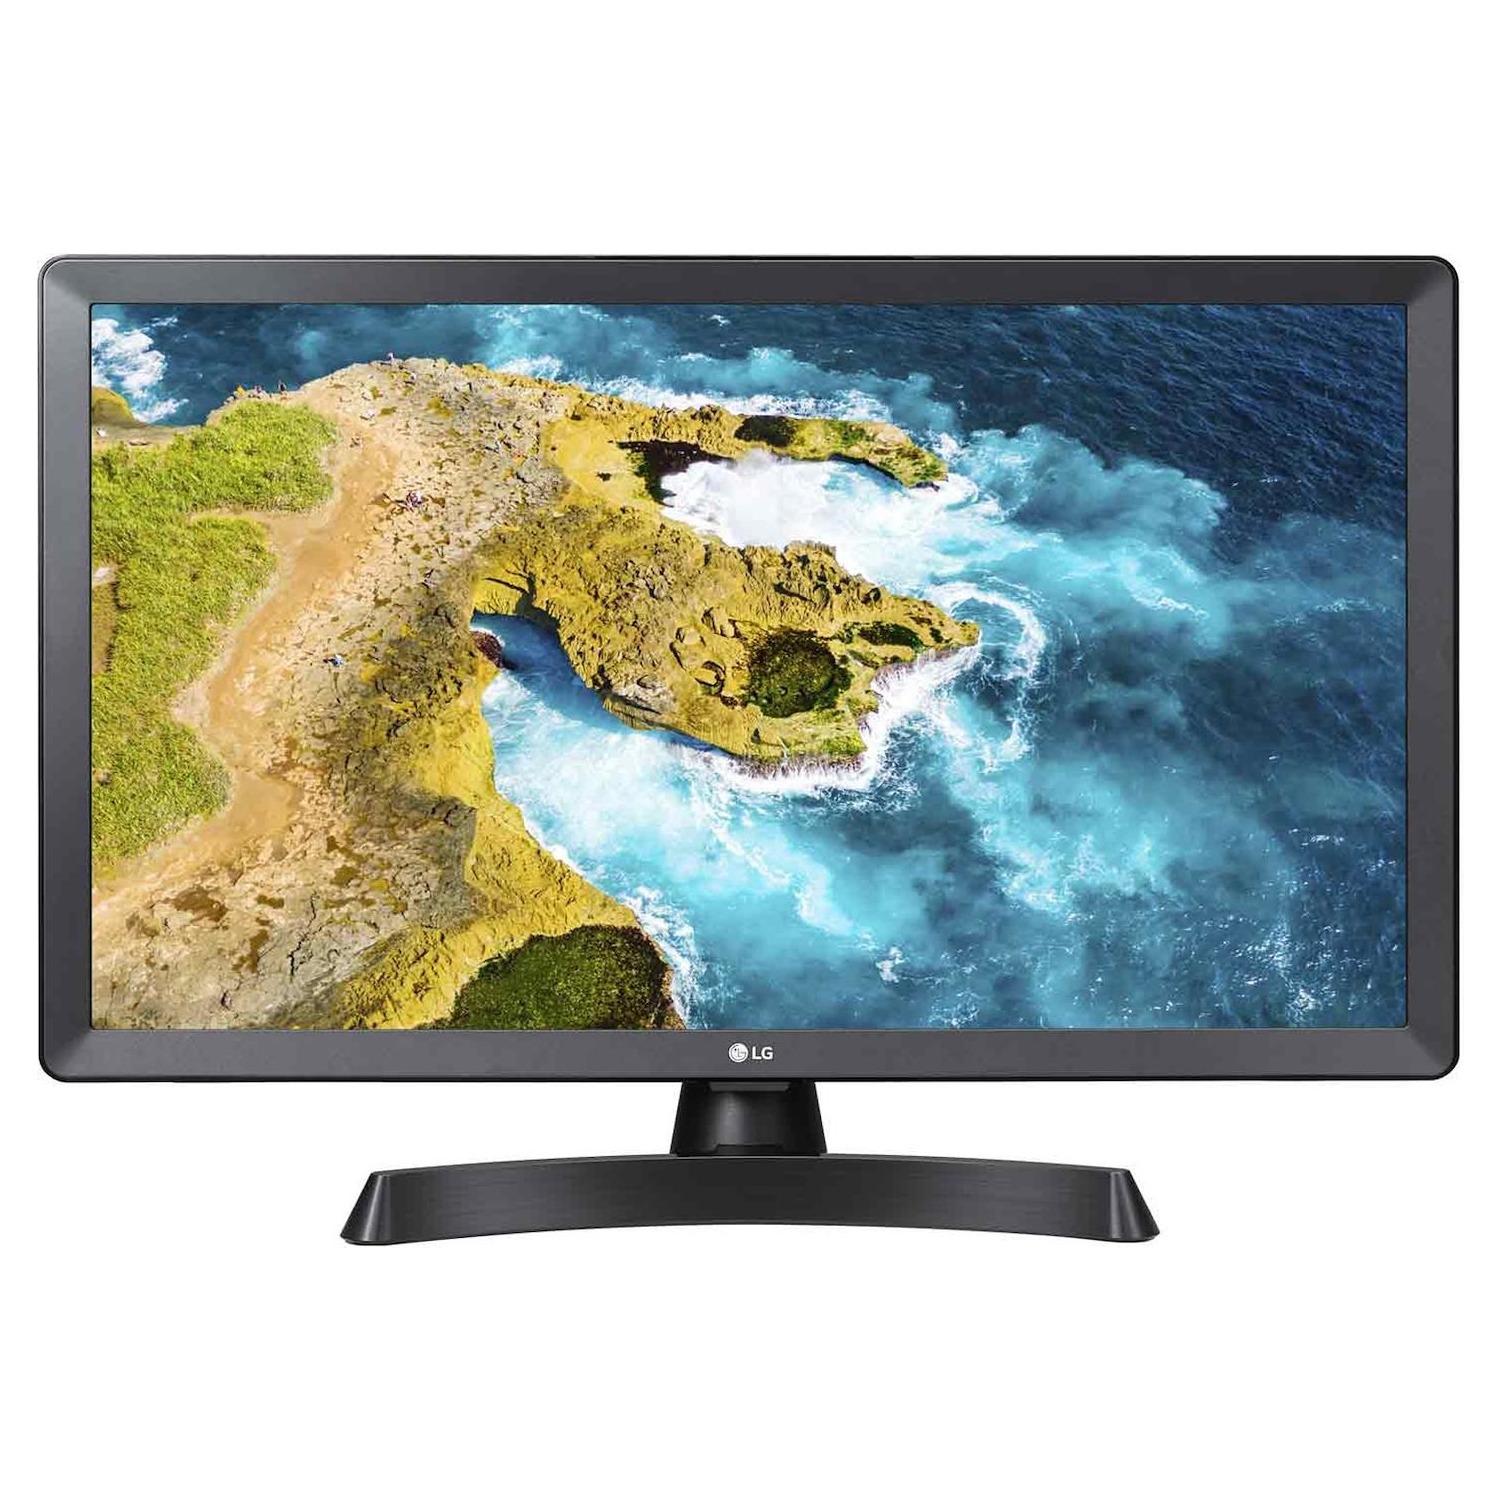 Immagine per TV LED Monitor Smart LG 24TQ510S-PZ nero da DIMOStore